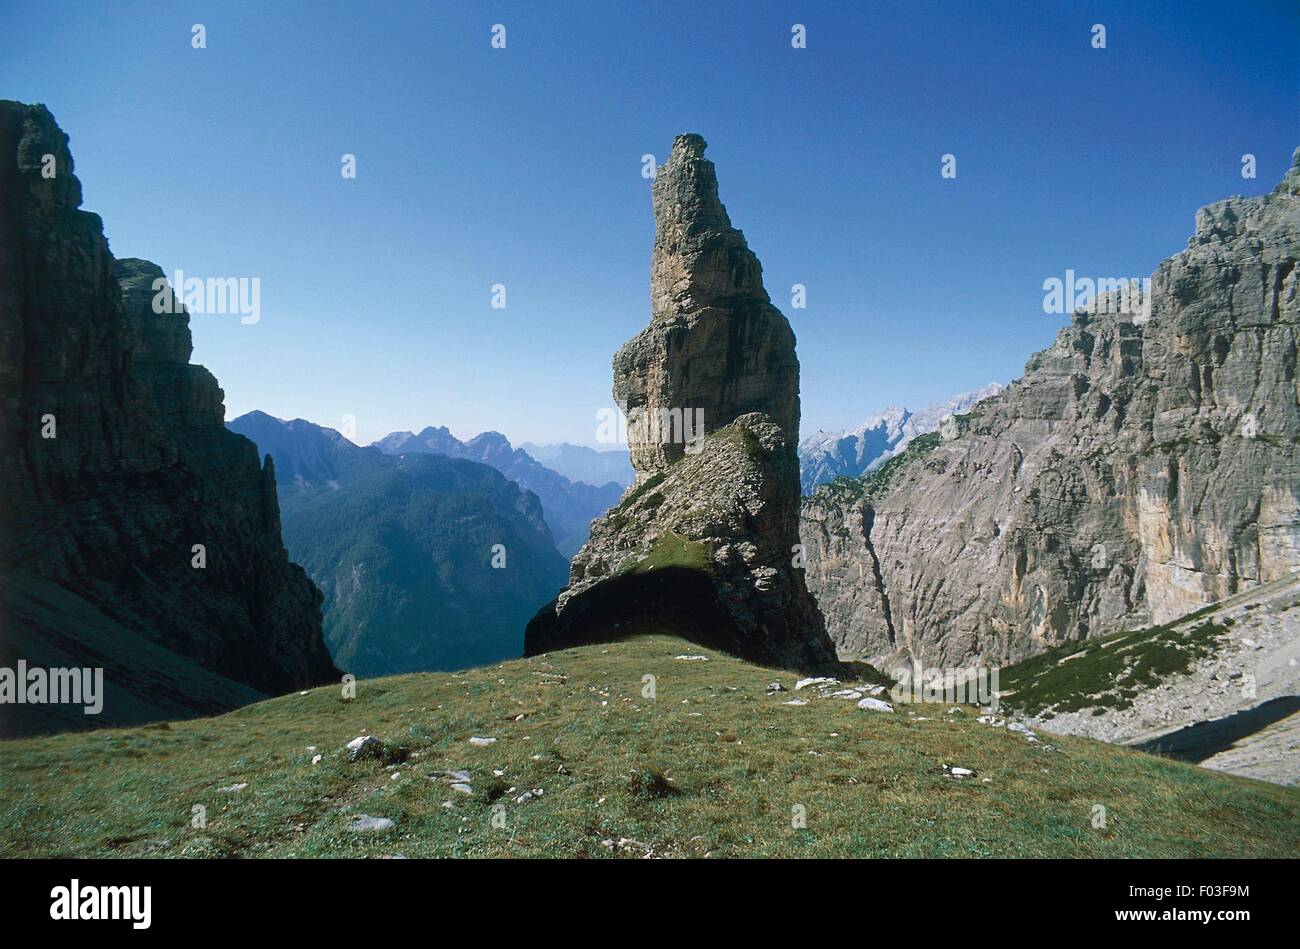 Italy - Friuli-Venezia Giulia Region - Friulan Dolomites Regional Natural Park - The bell tower of the Montanaia Valley seen from Bivacco Perugini. Stock Photo